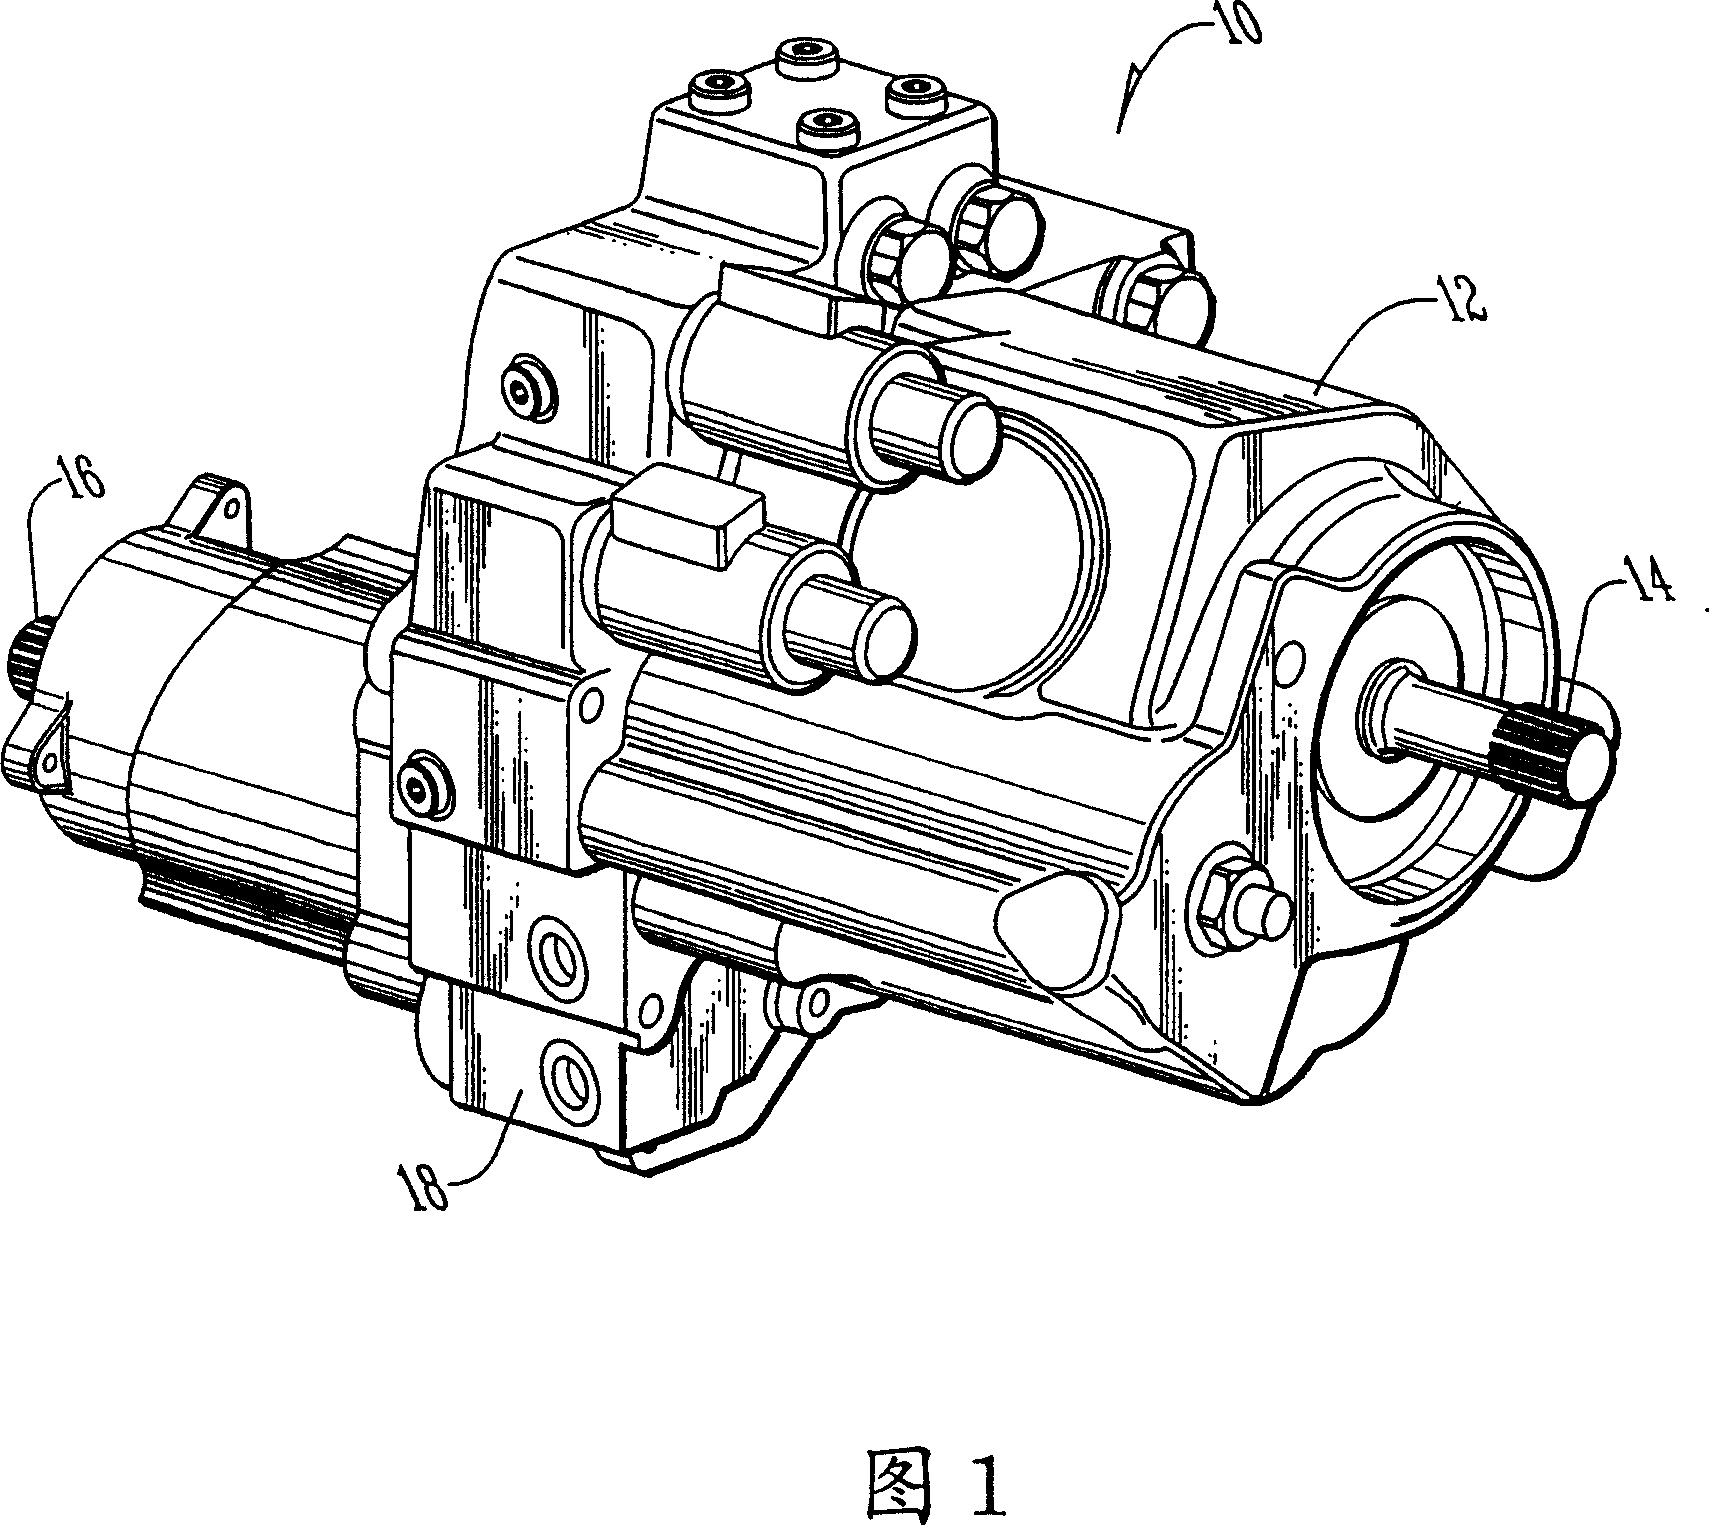 Control system of hydrautic pump